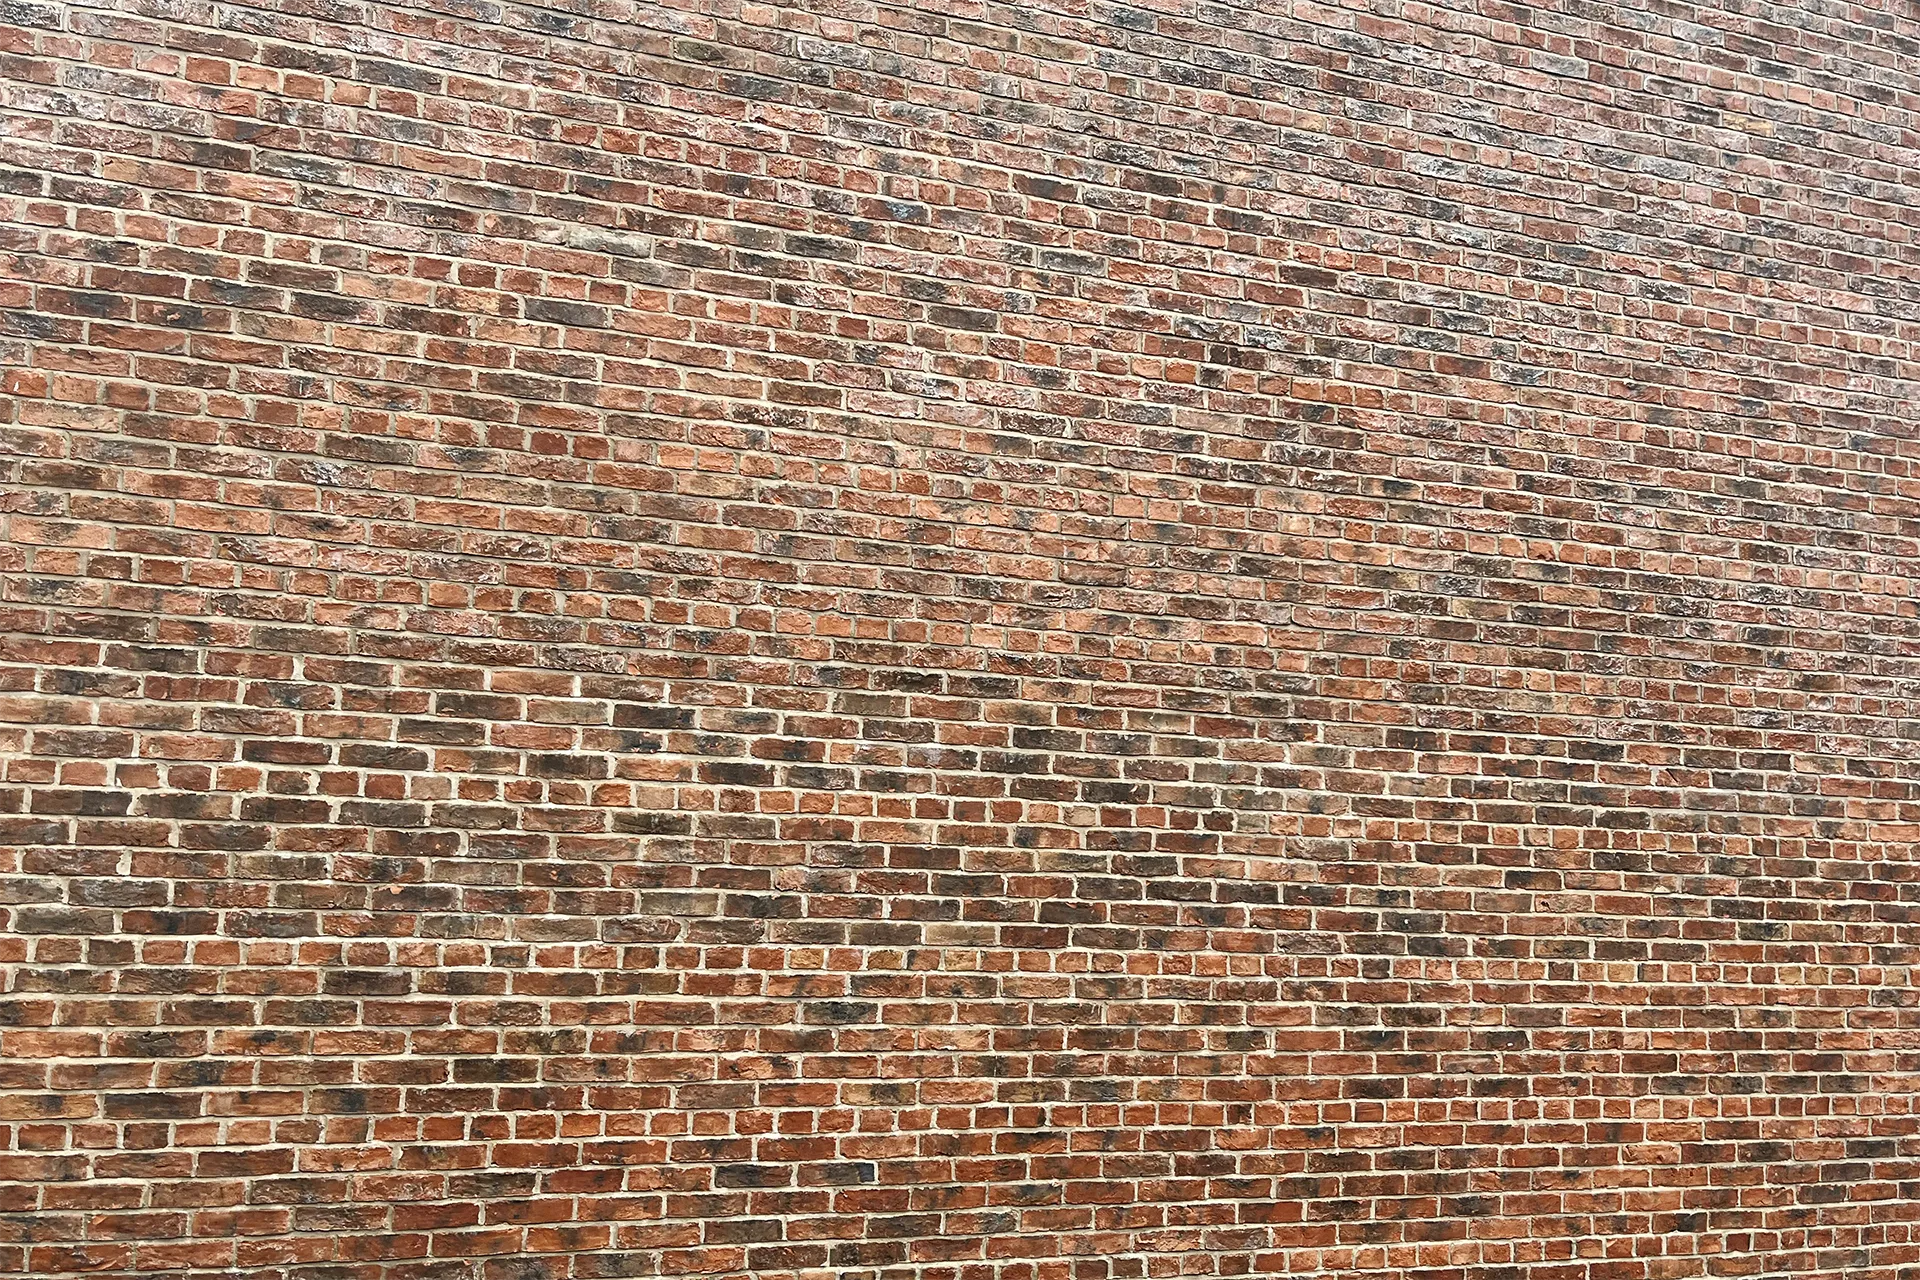 Bark Hill case study - brick wall